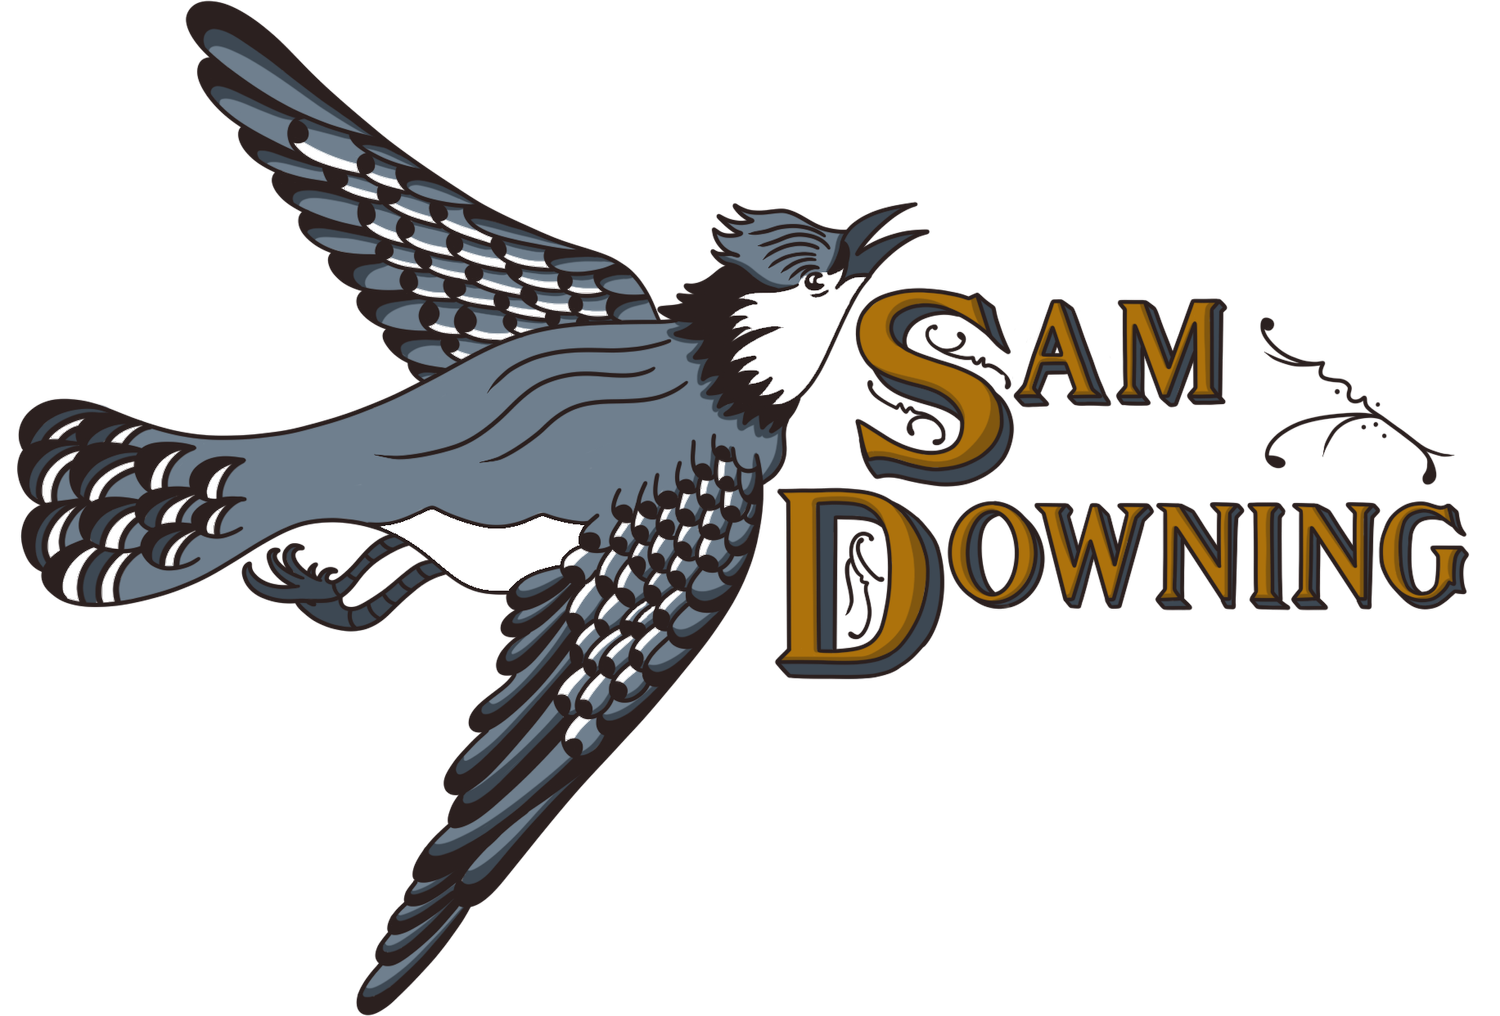 Sam Downing